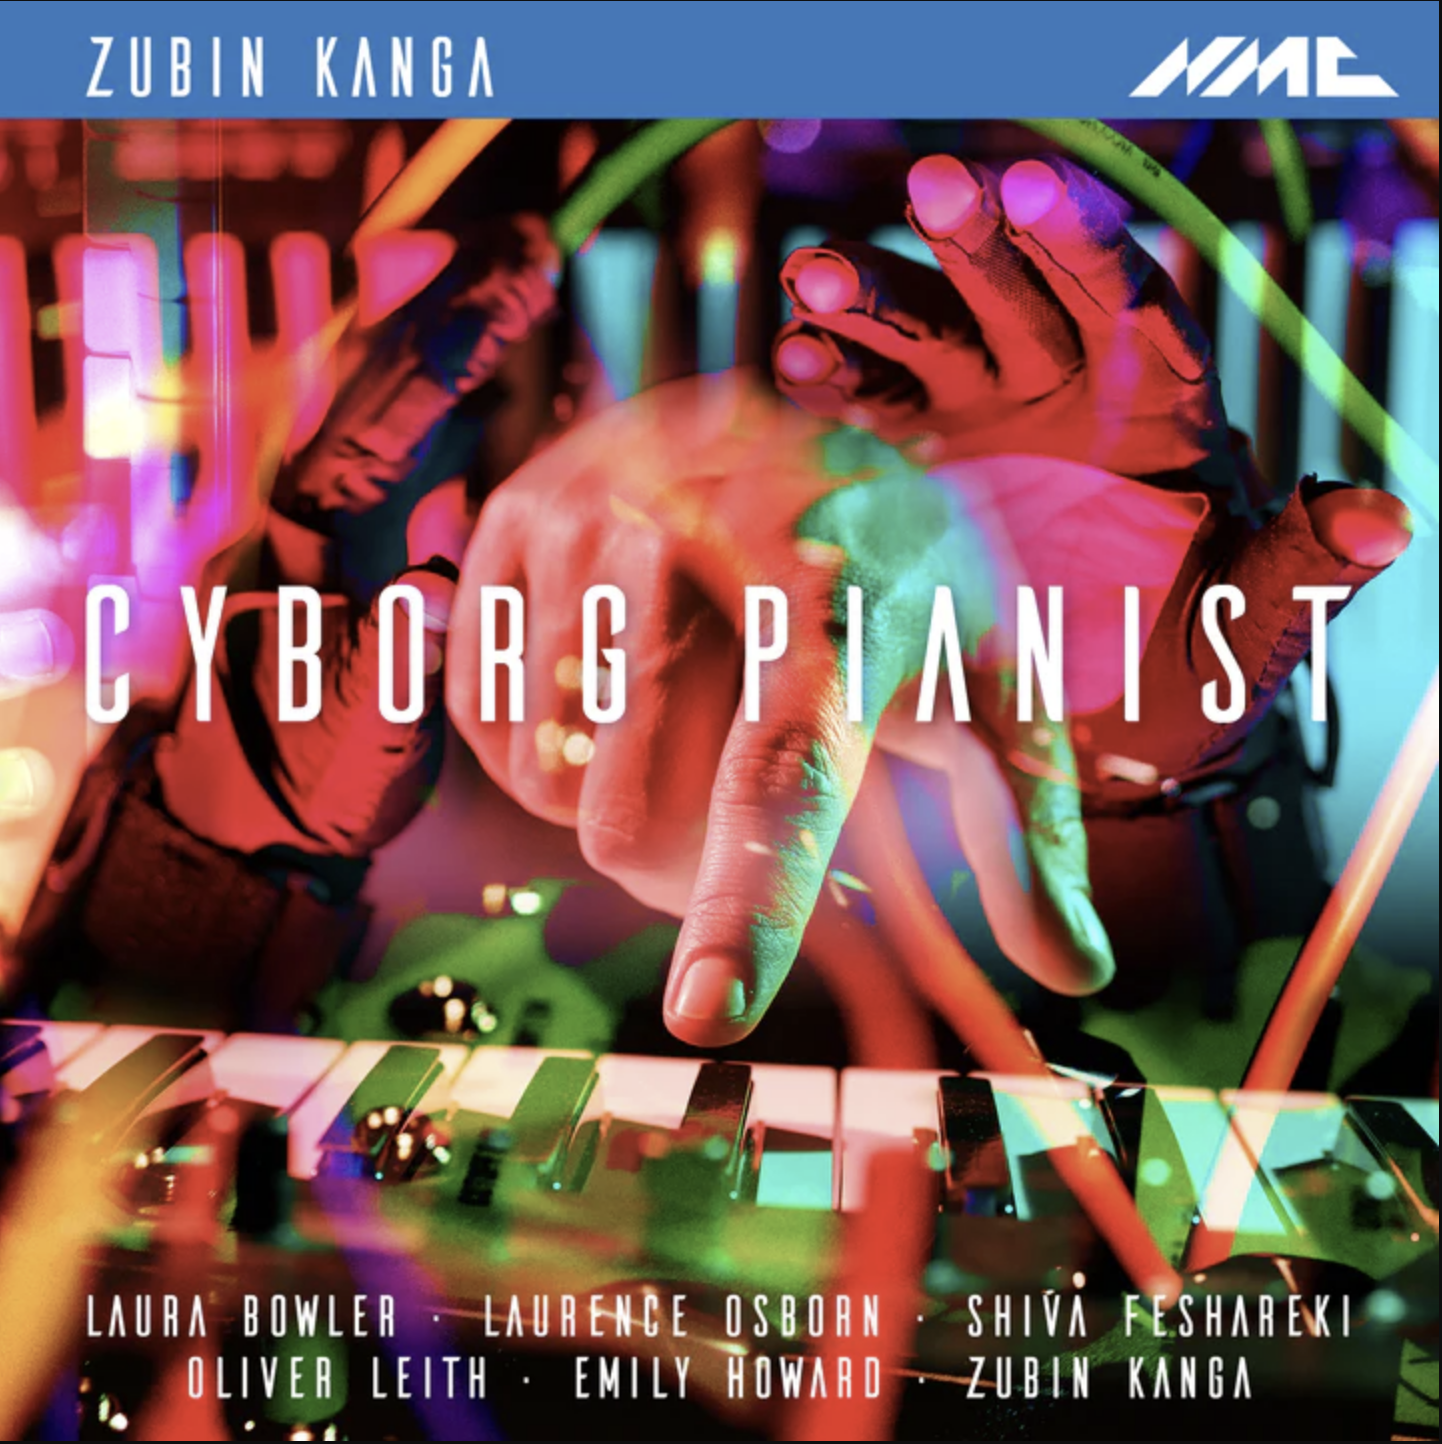 ‘Cyborg Pianist’ CD Cover